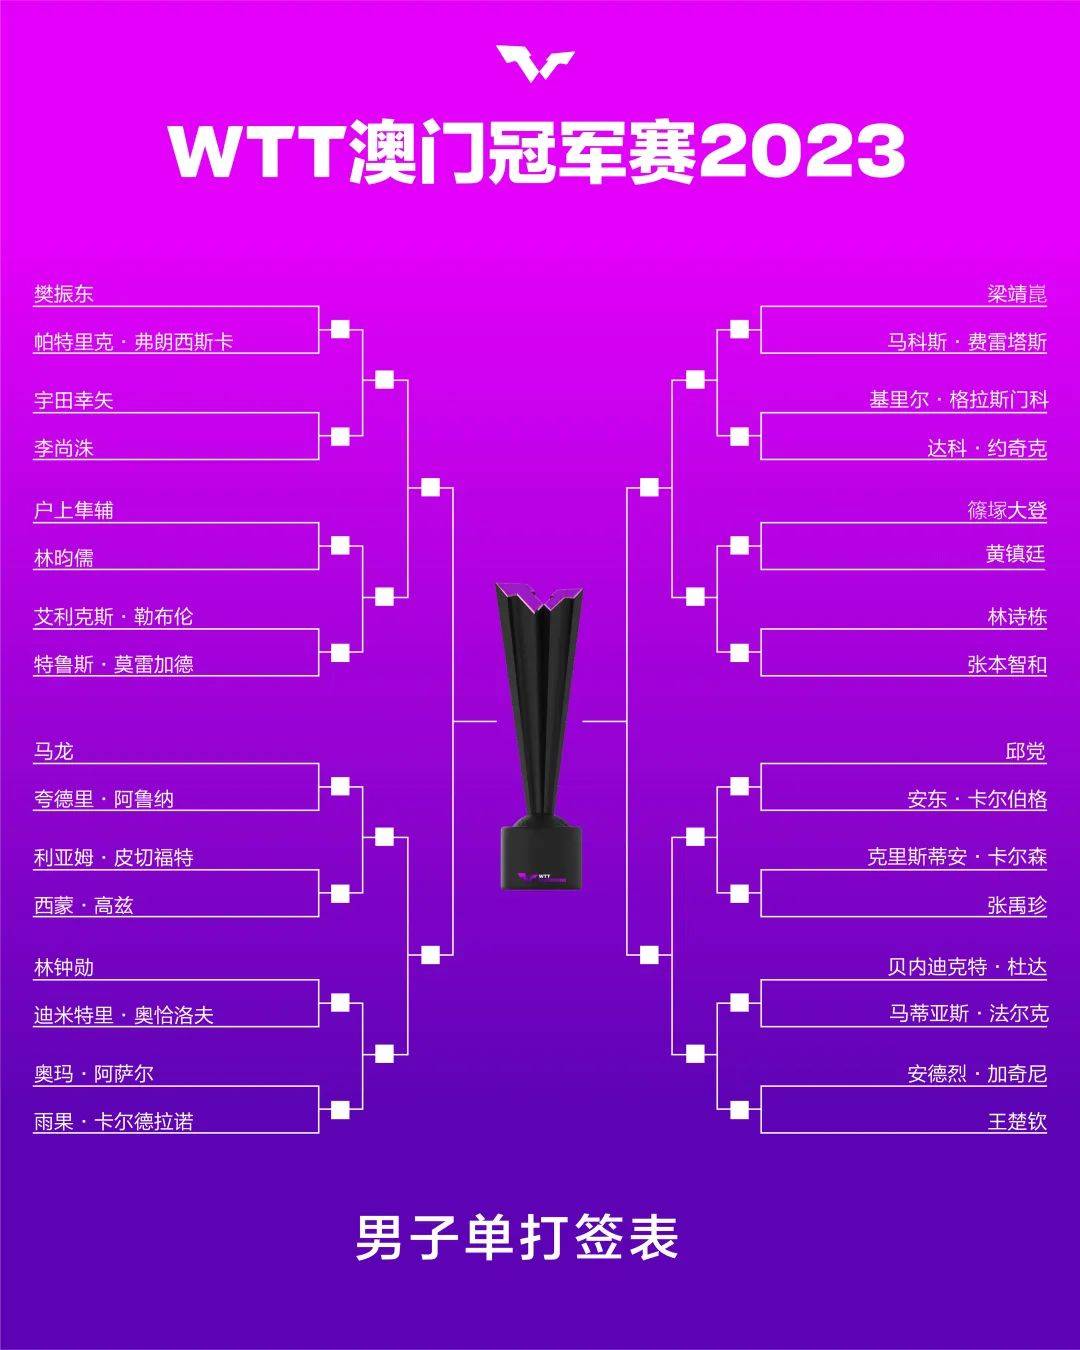 WTT澳门冠军赛2022赛程表+对阵表一览_深圳之窗